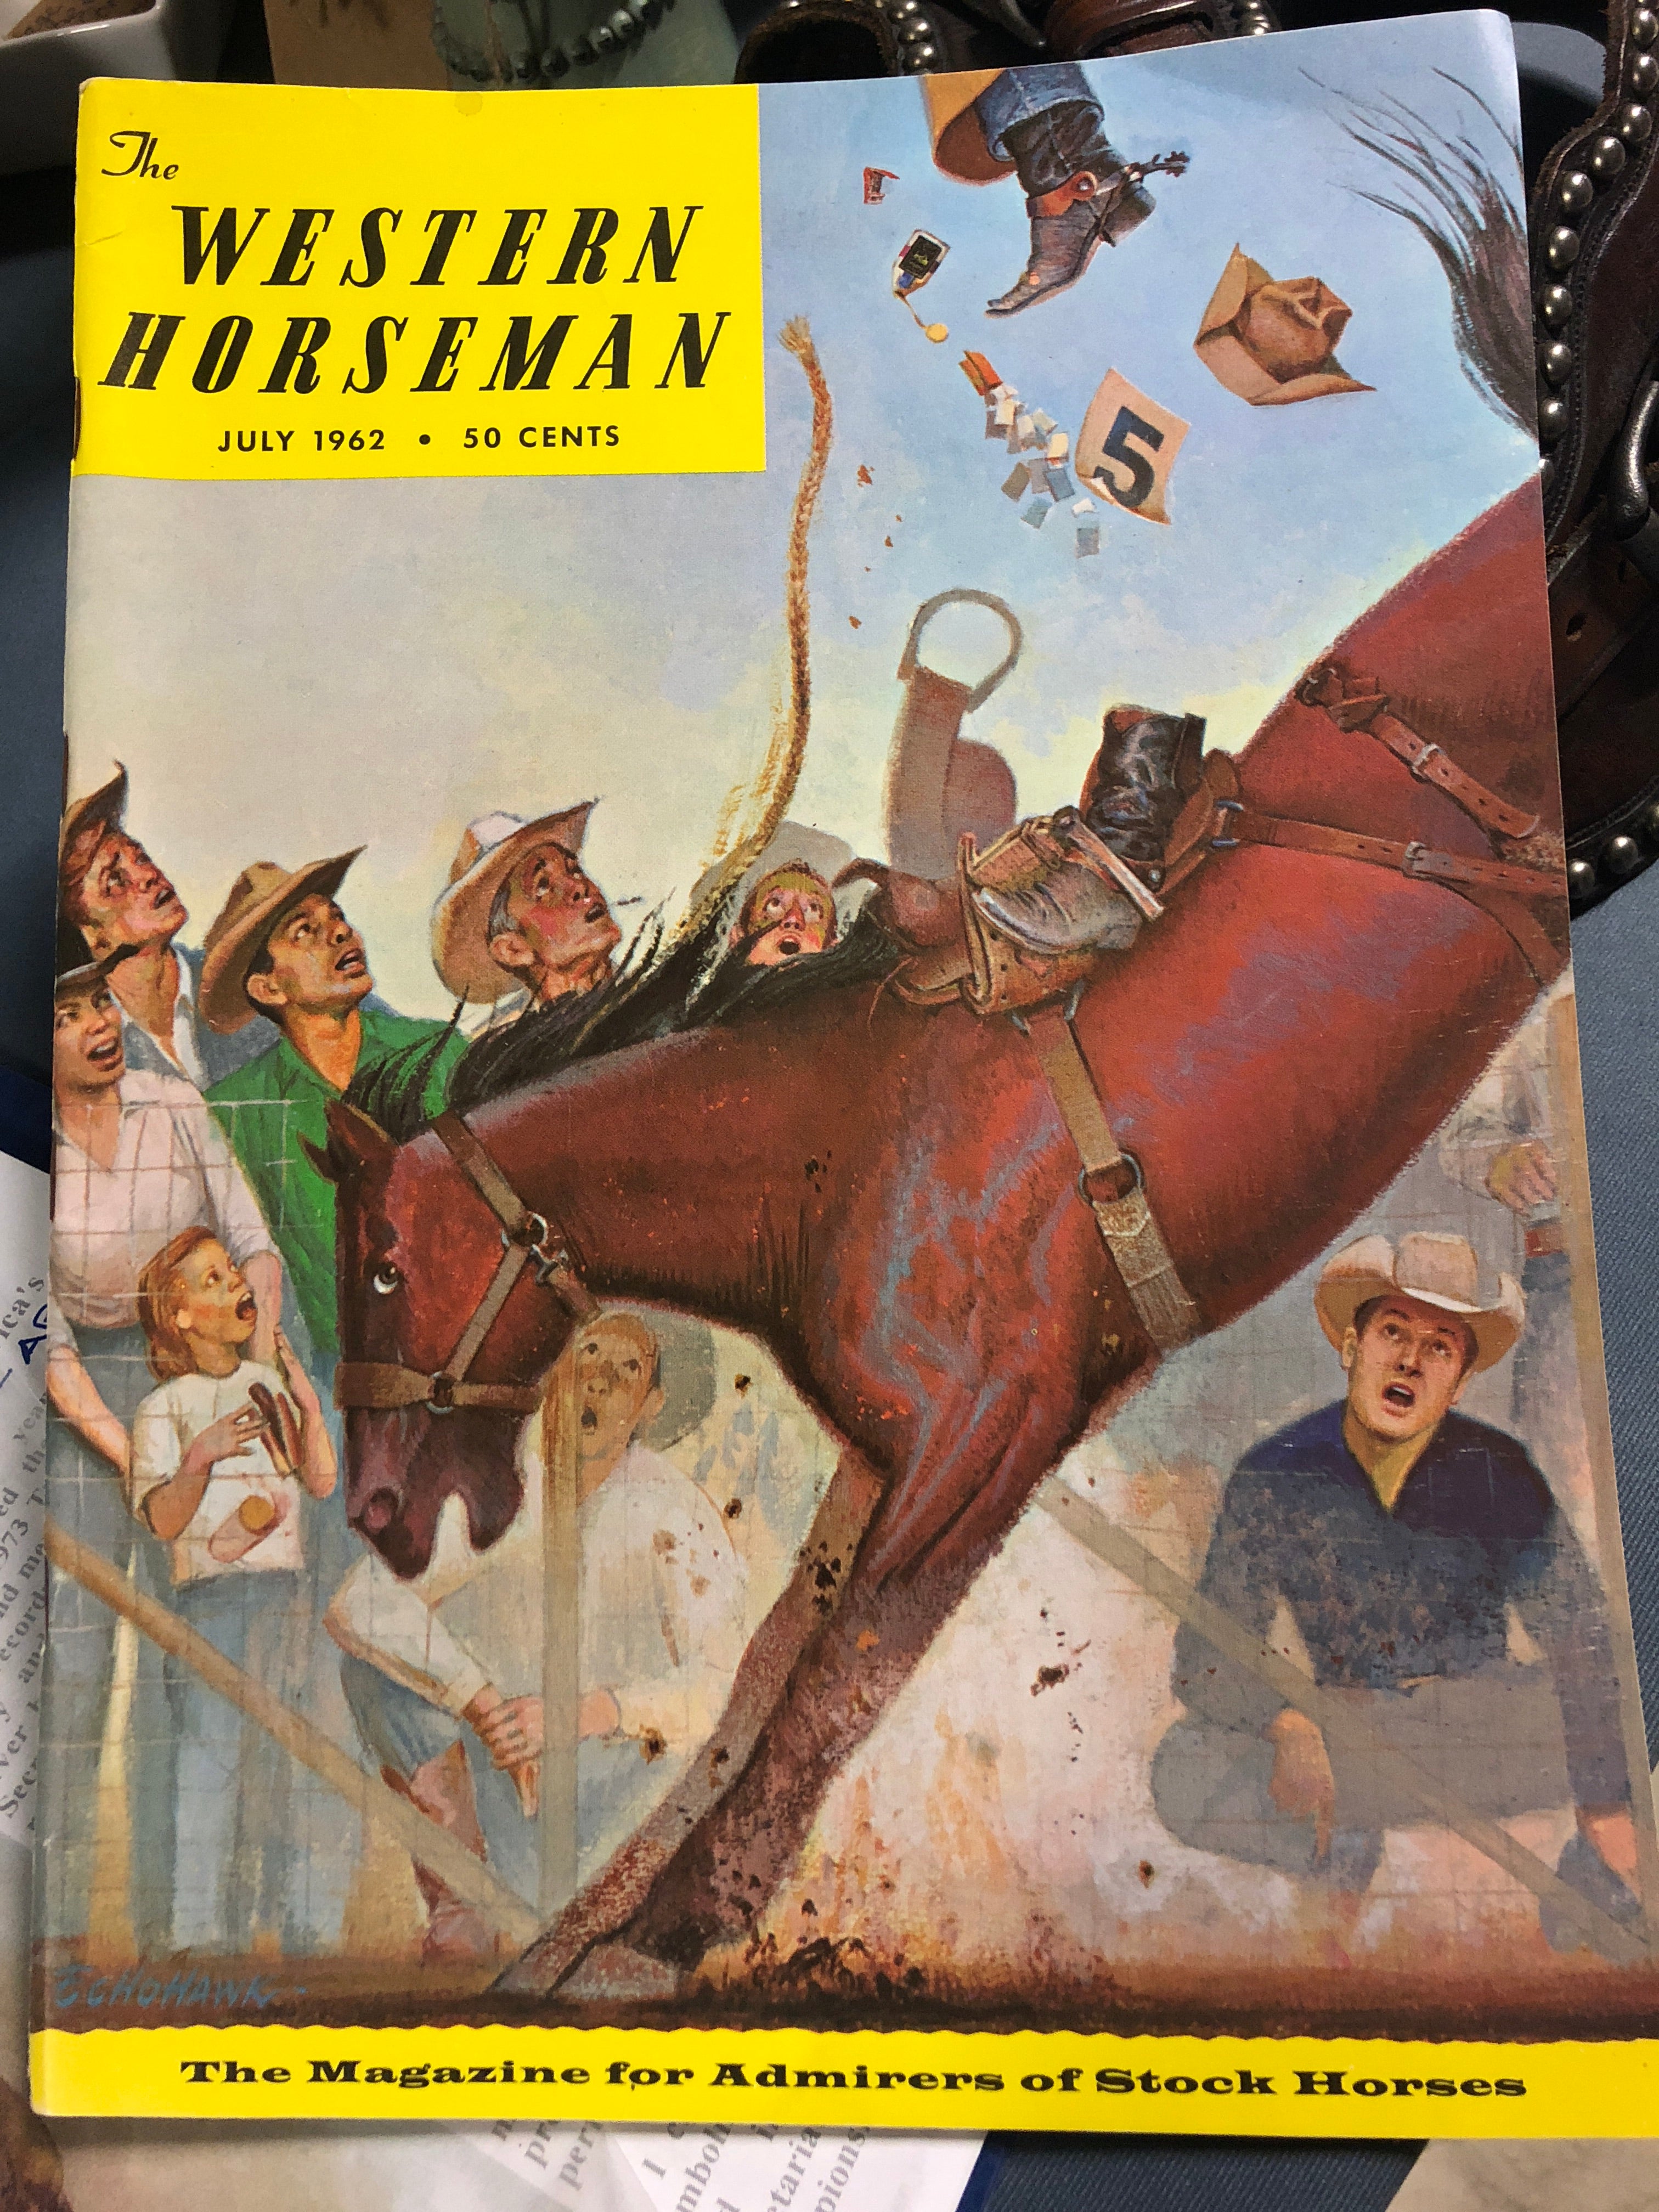 The Western Horseman